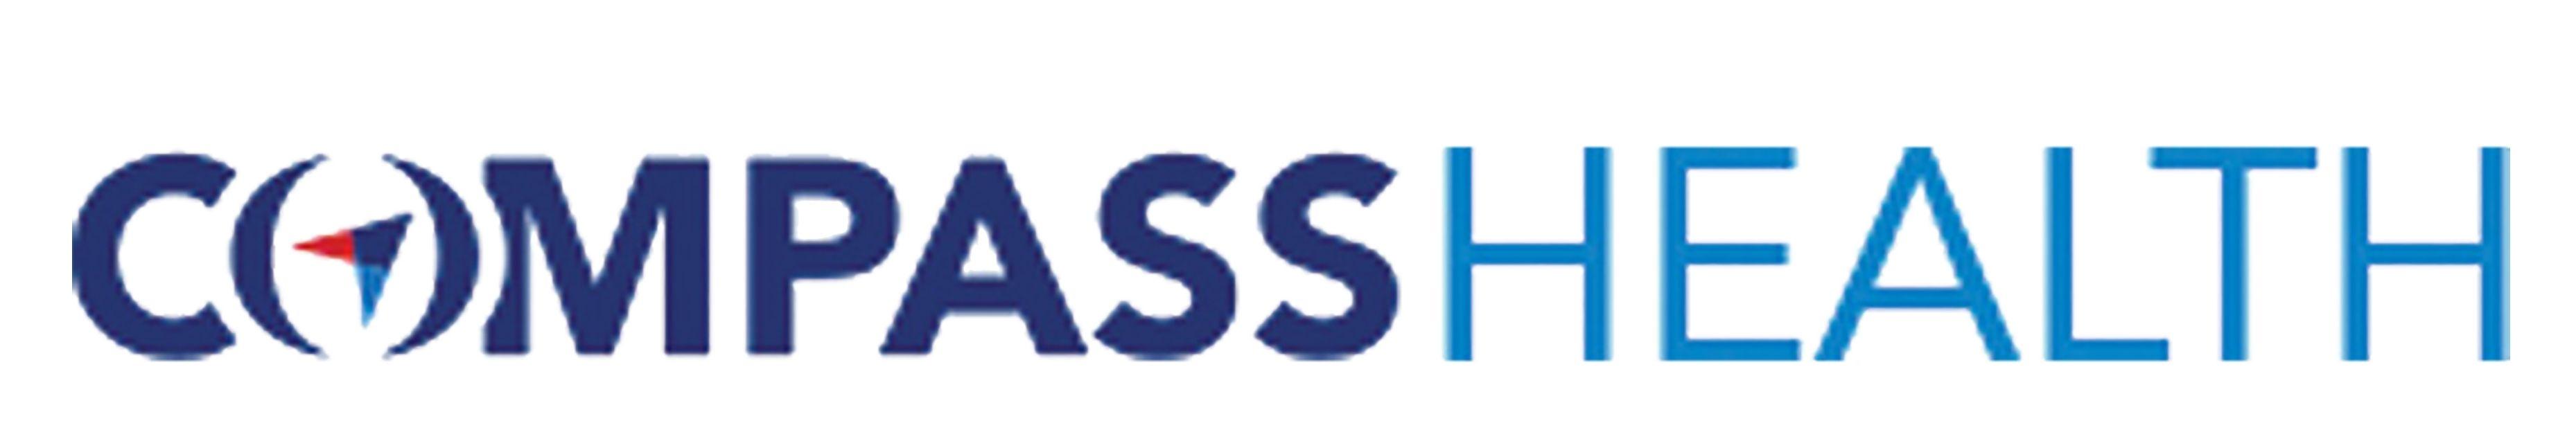 Compass Health Logo - LogoDix